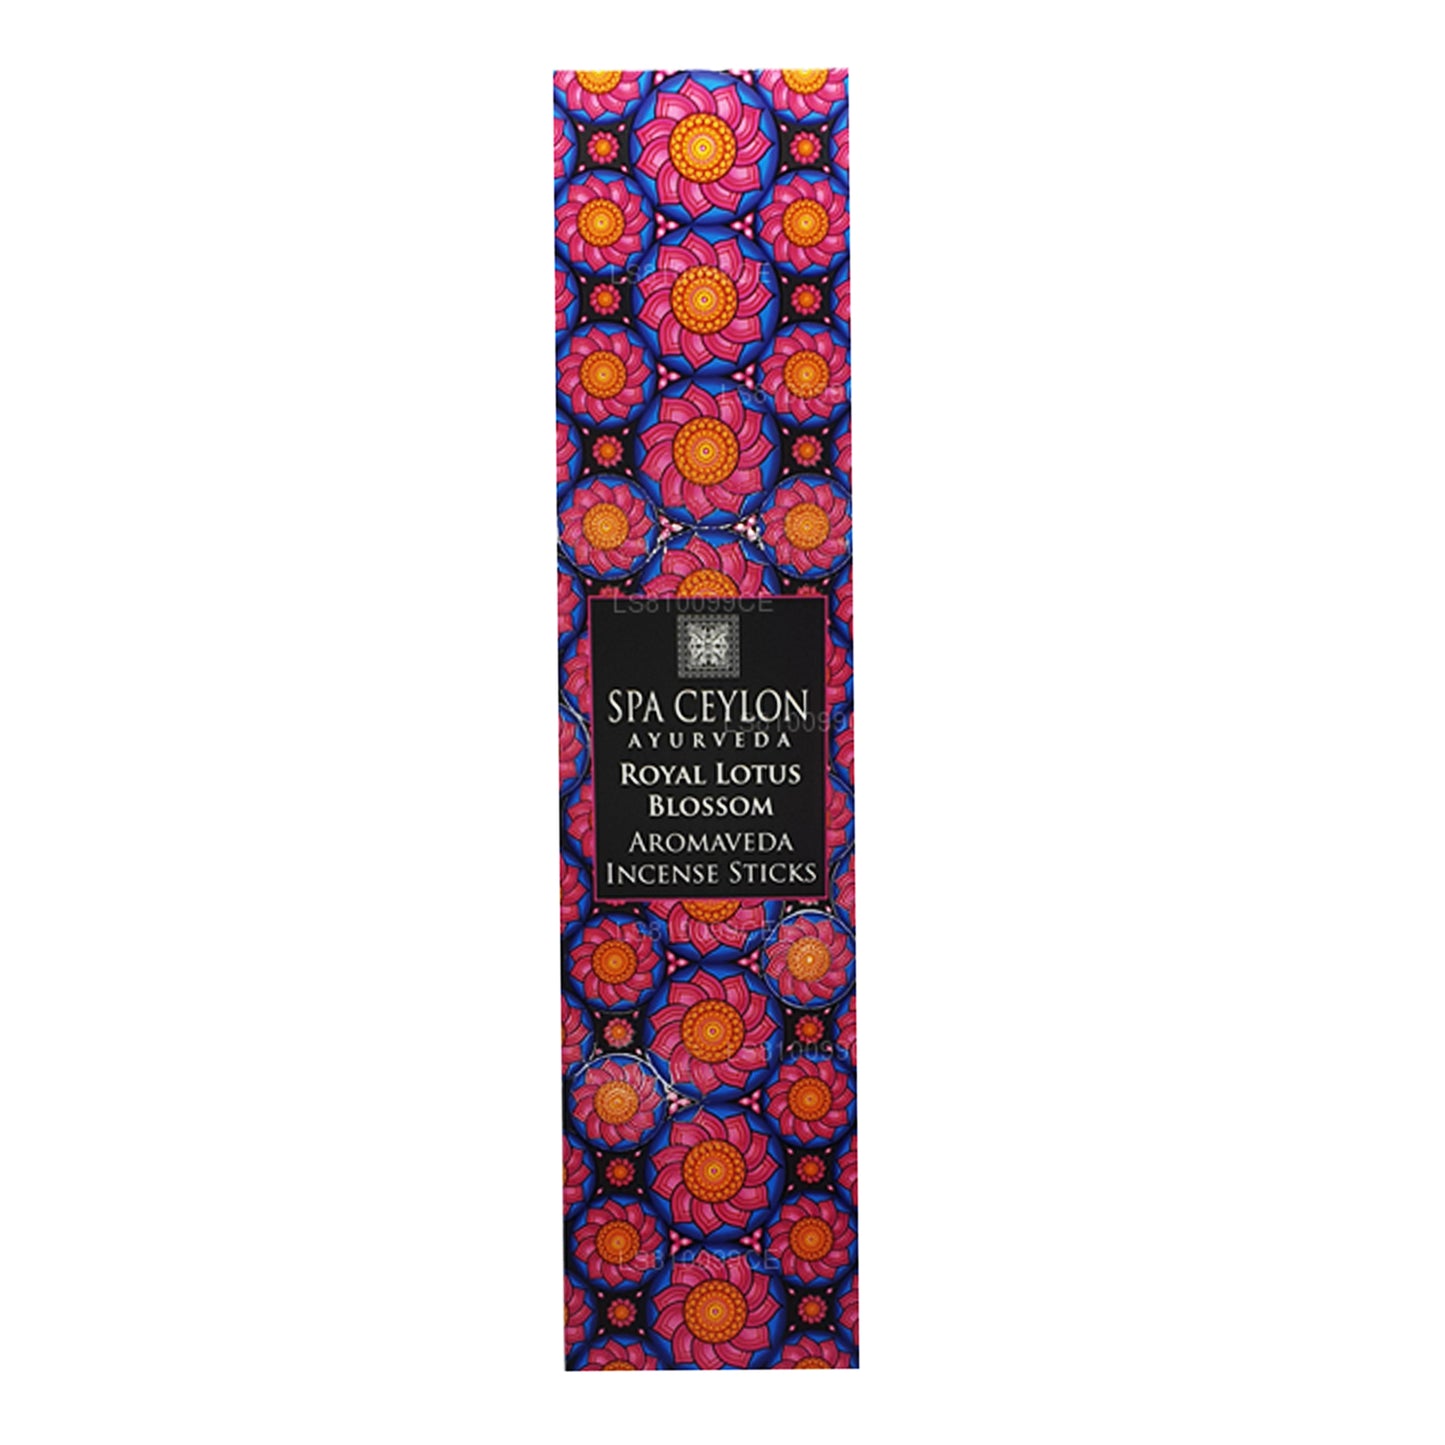 Spa Ceylon Royal Lotus Blossom Aromaveda (30) Incense Sticks